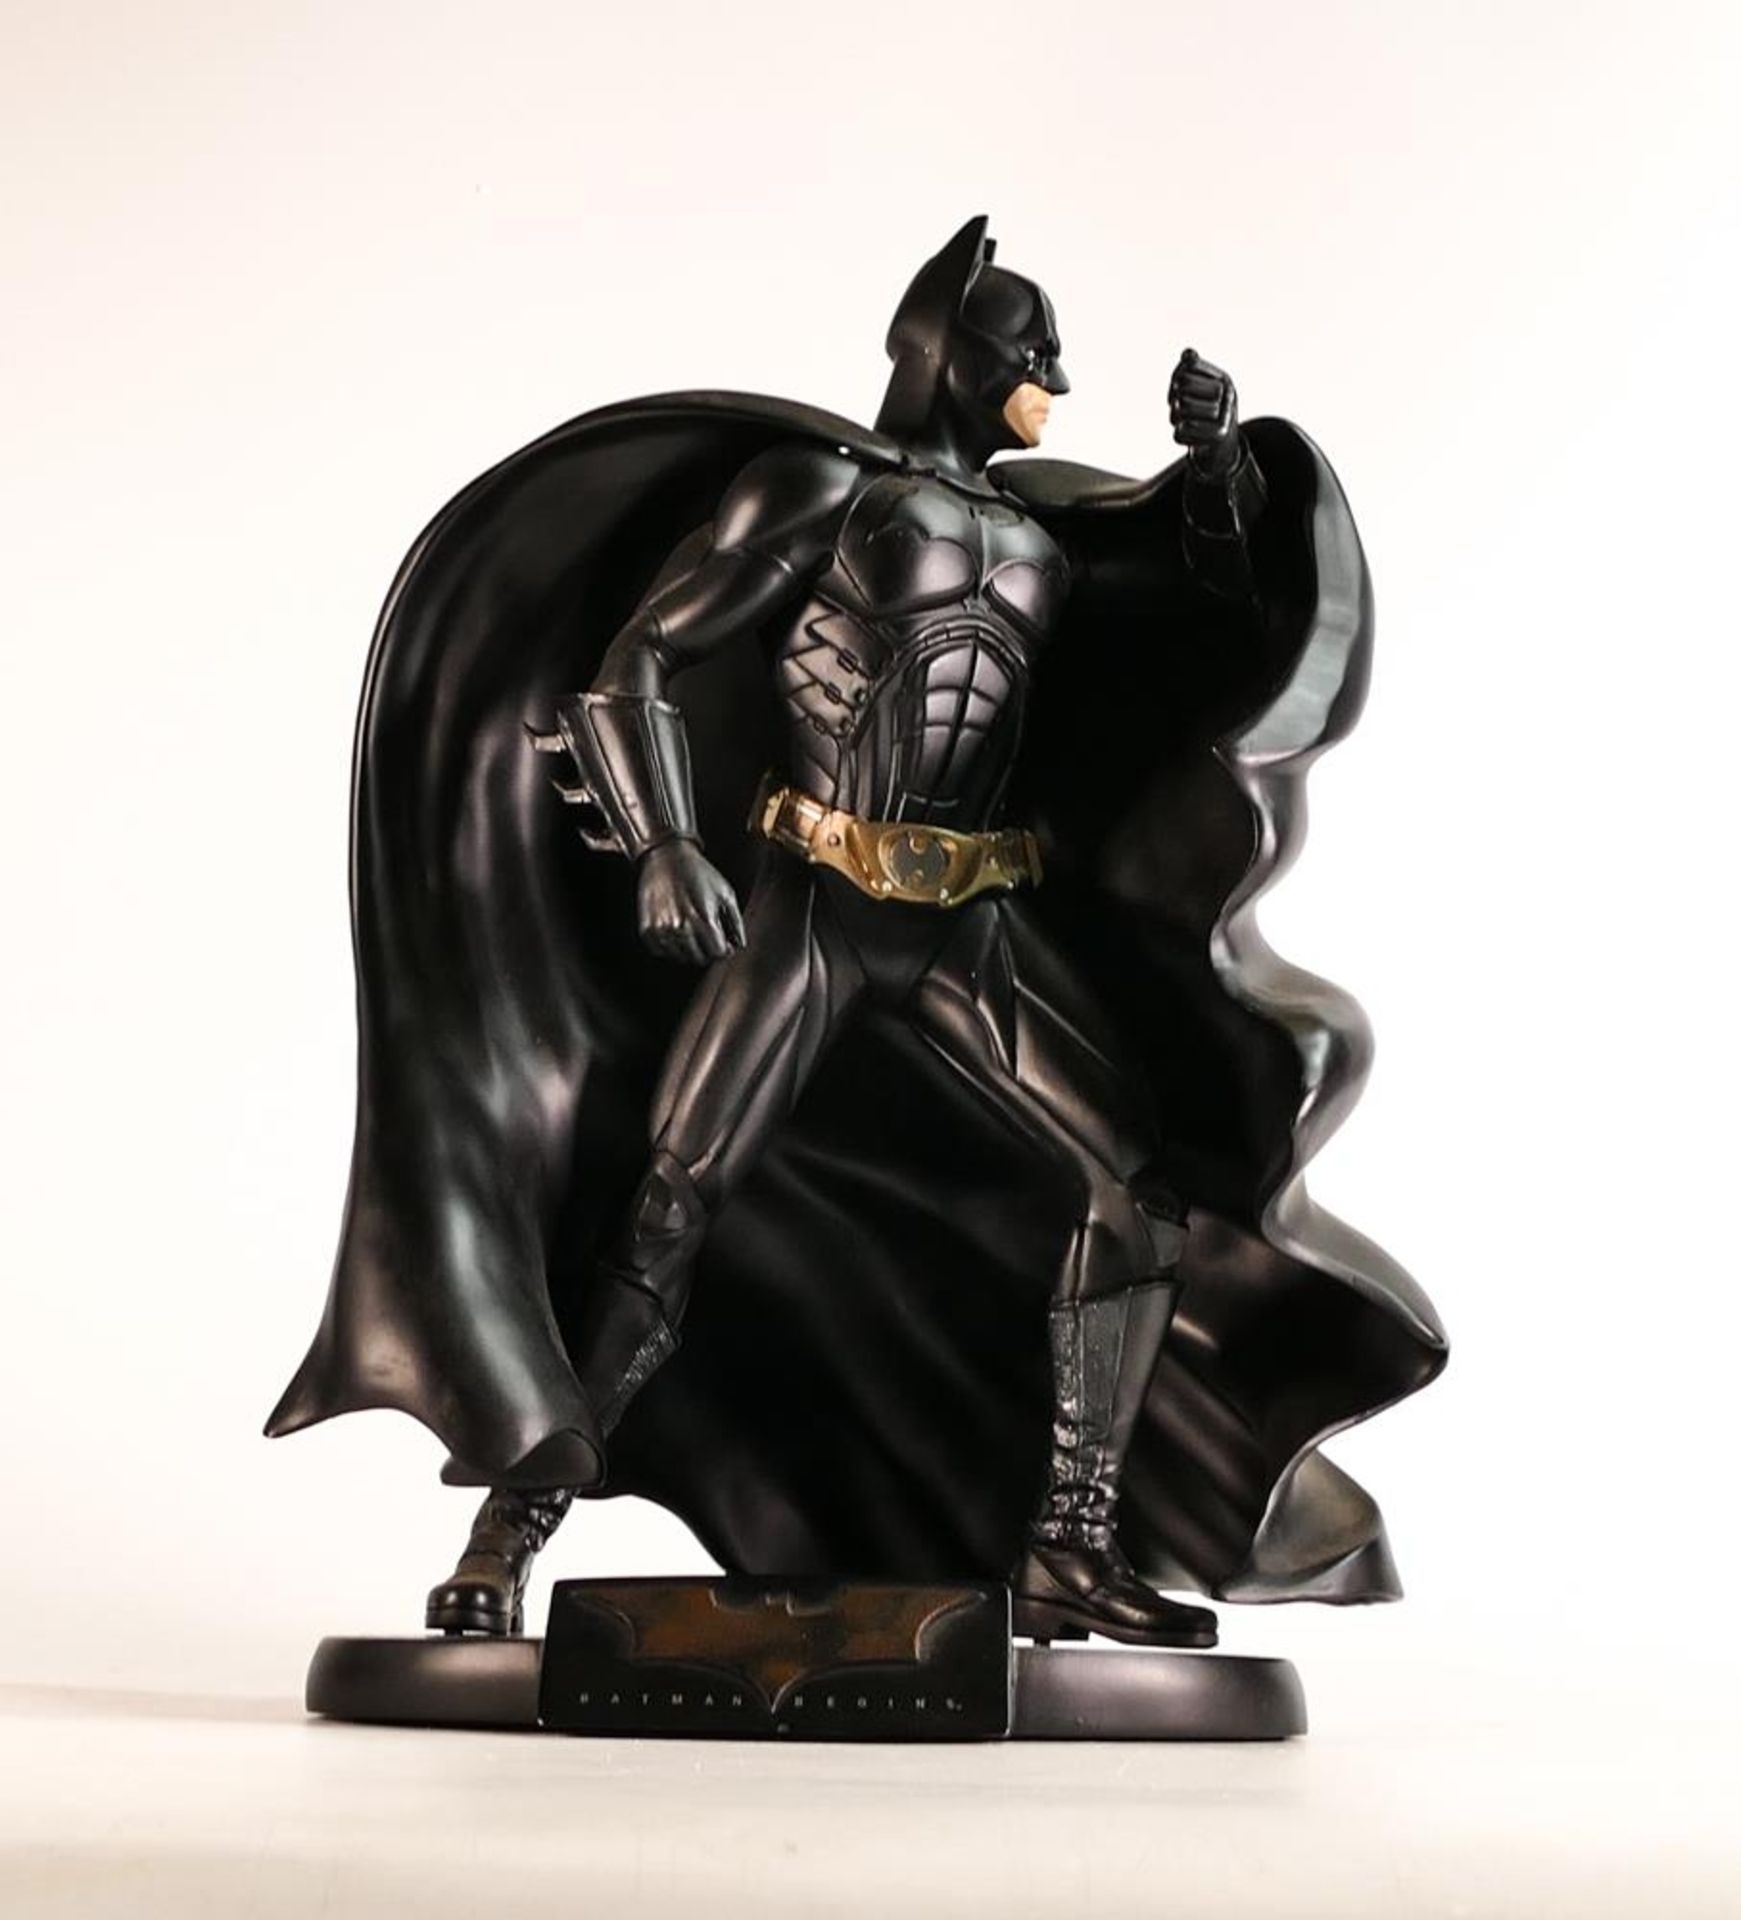 DC Comics 14" Batman Figure Christian Bell as Batman Statue, boxed but unchecked - Image 2 of 5